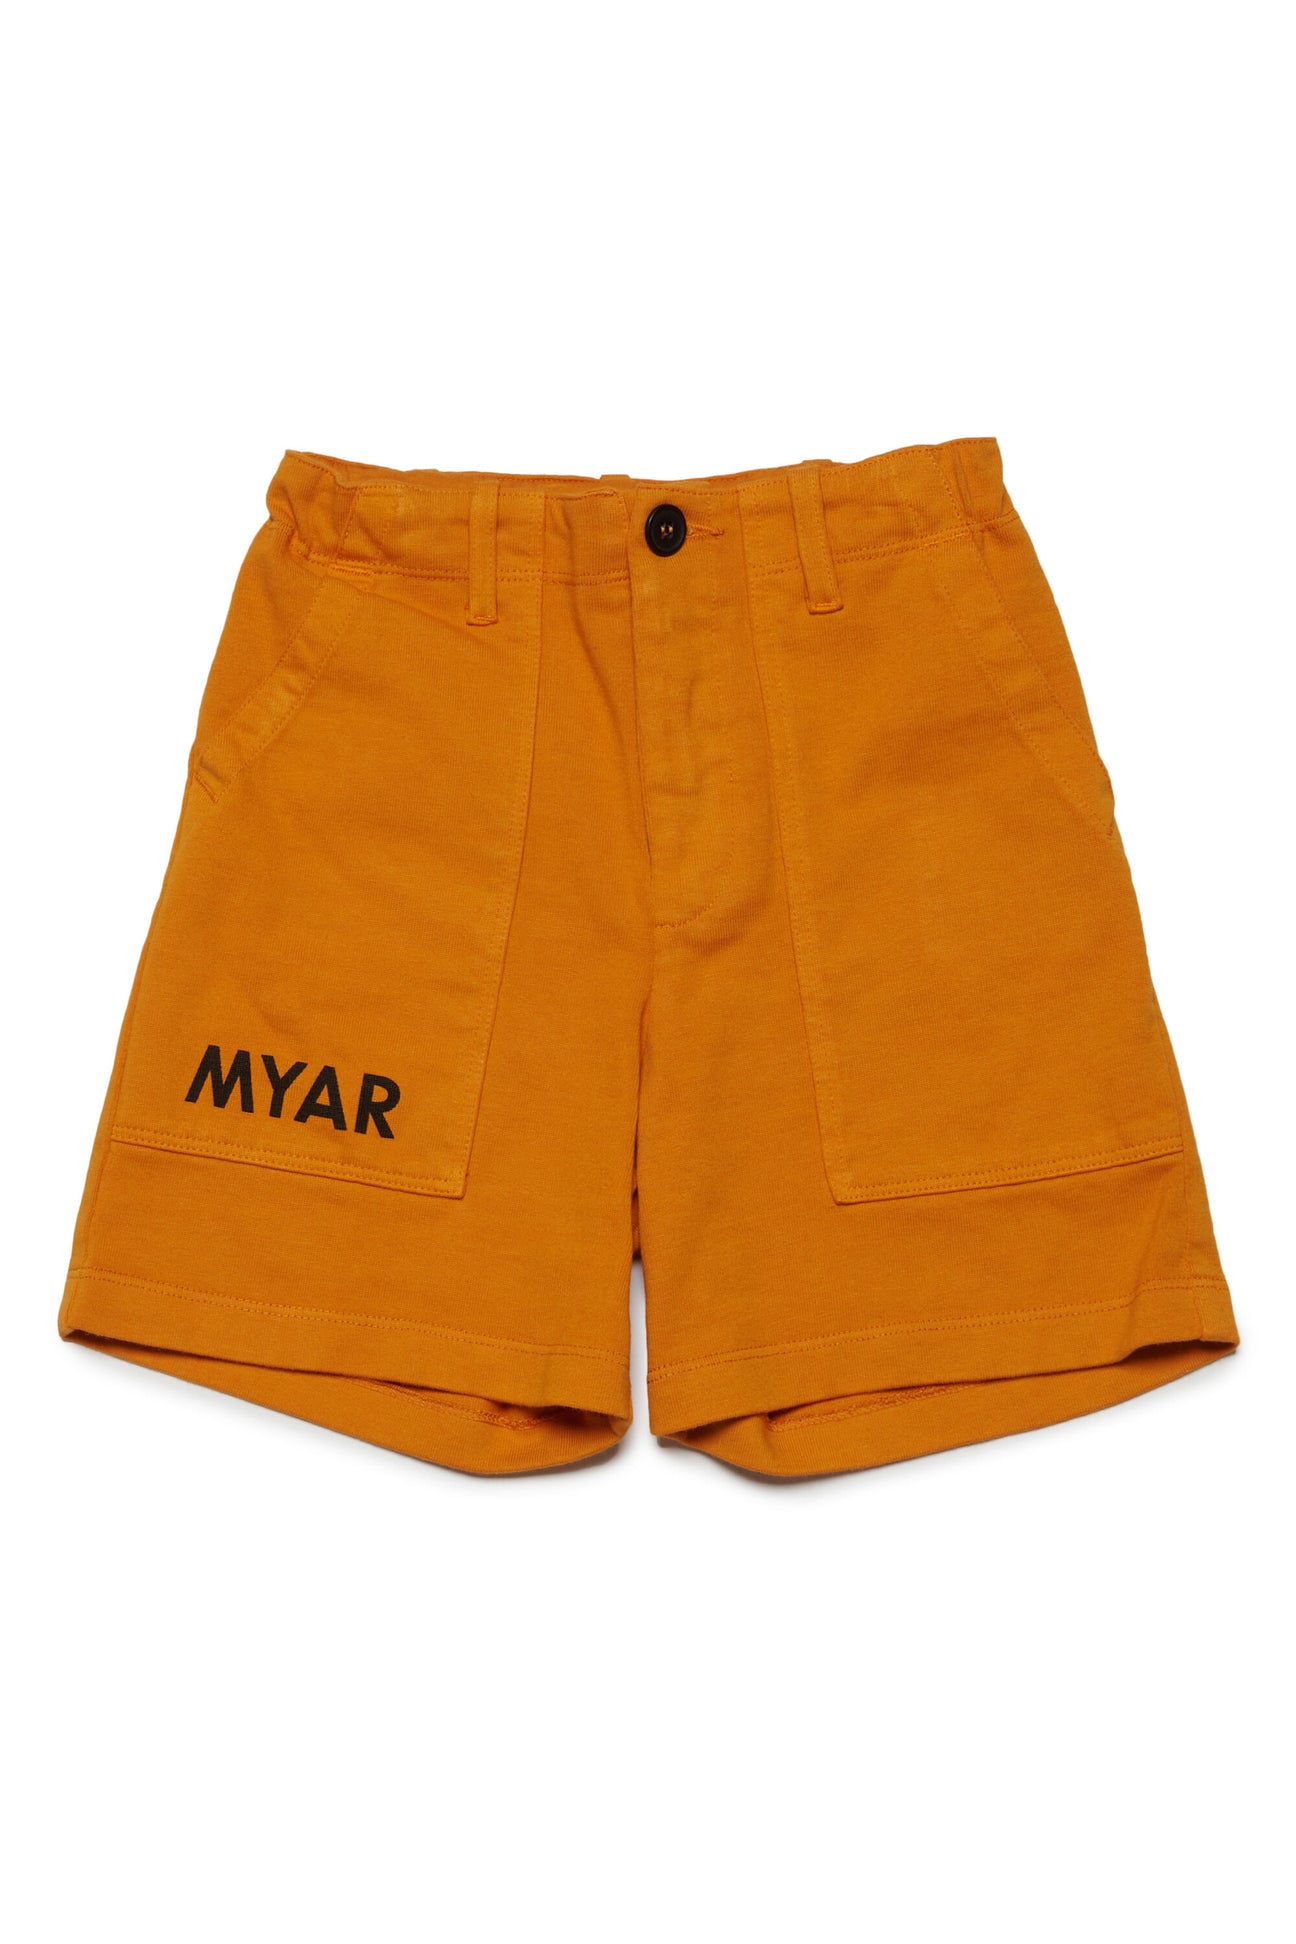 Utility shorts with MYAR logo 